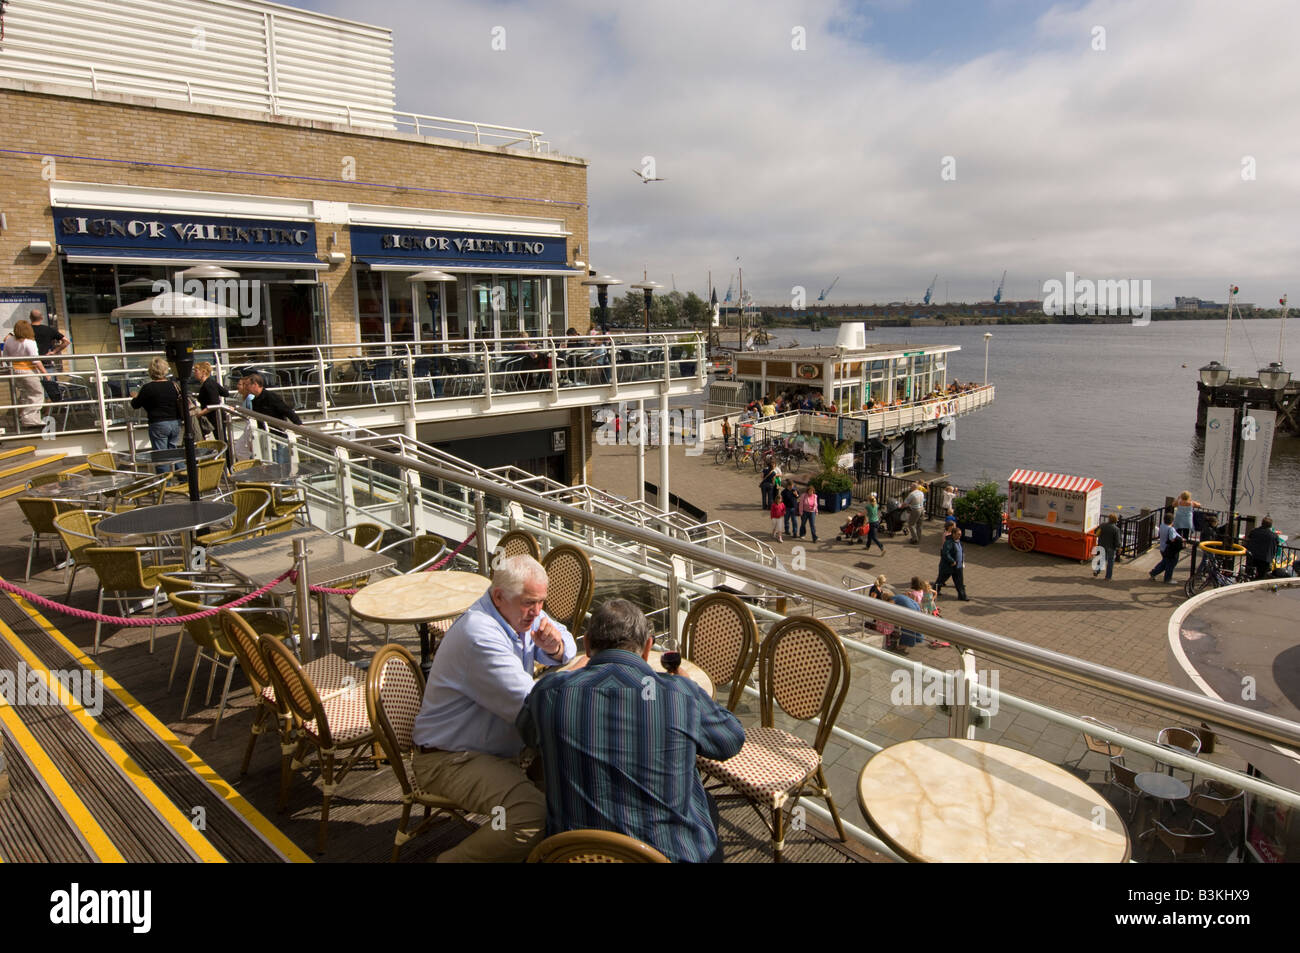 people cafe bars restaurants on Mermaid Quay Cardiff Bay Wales UK